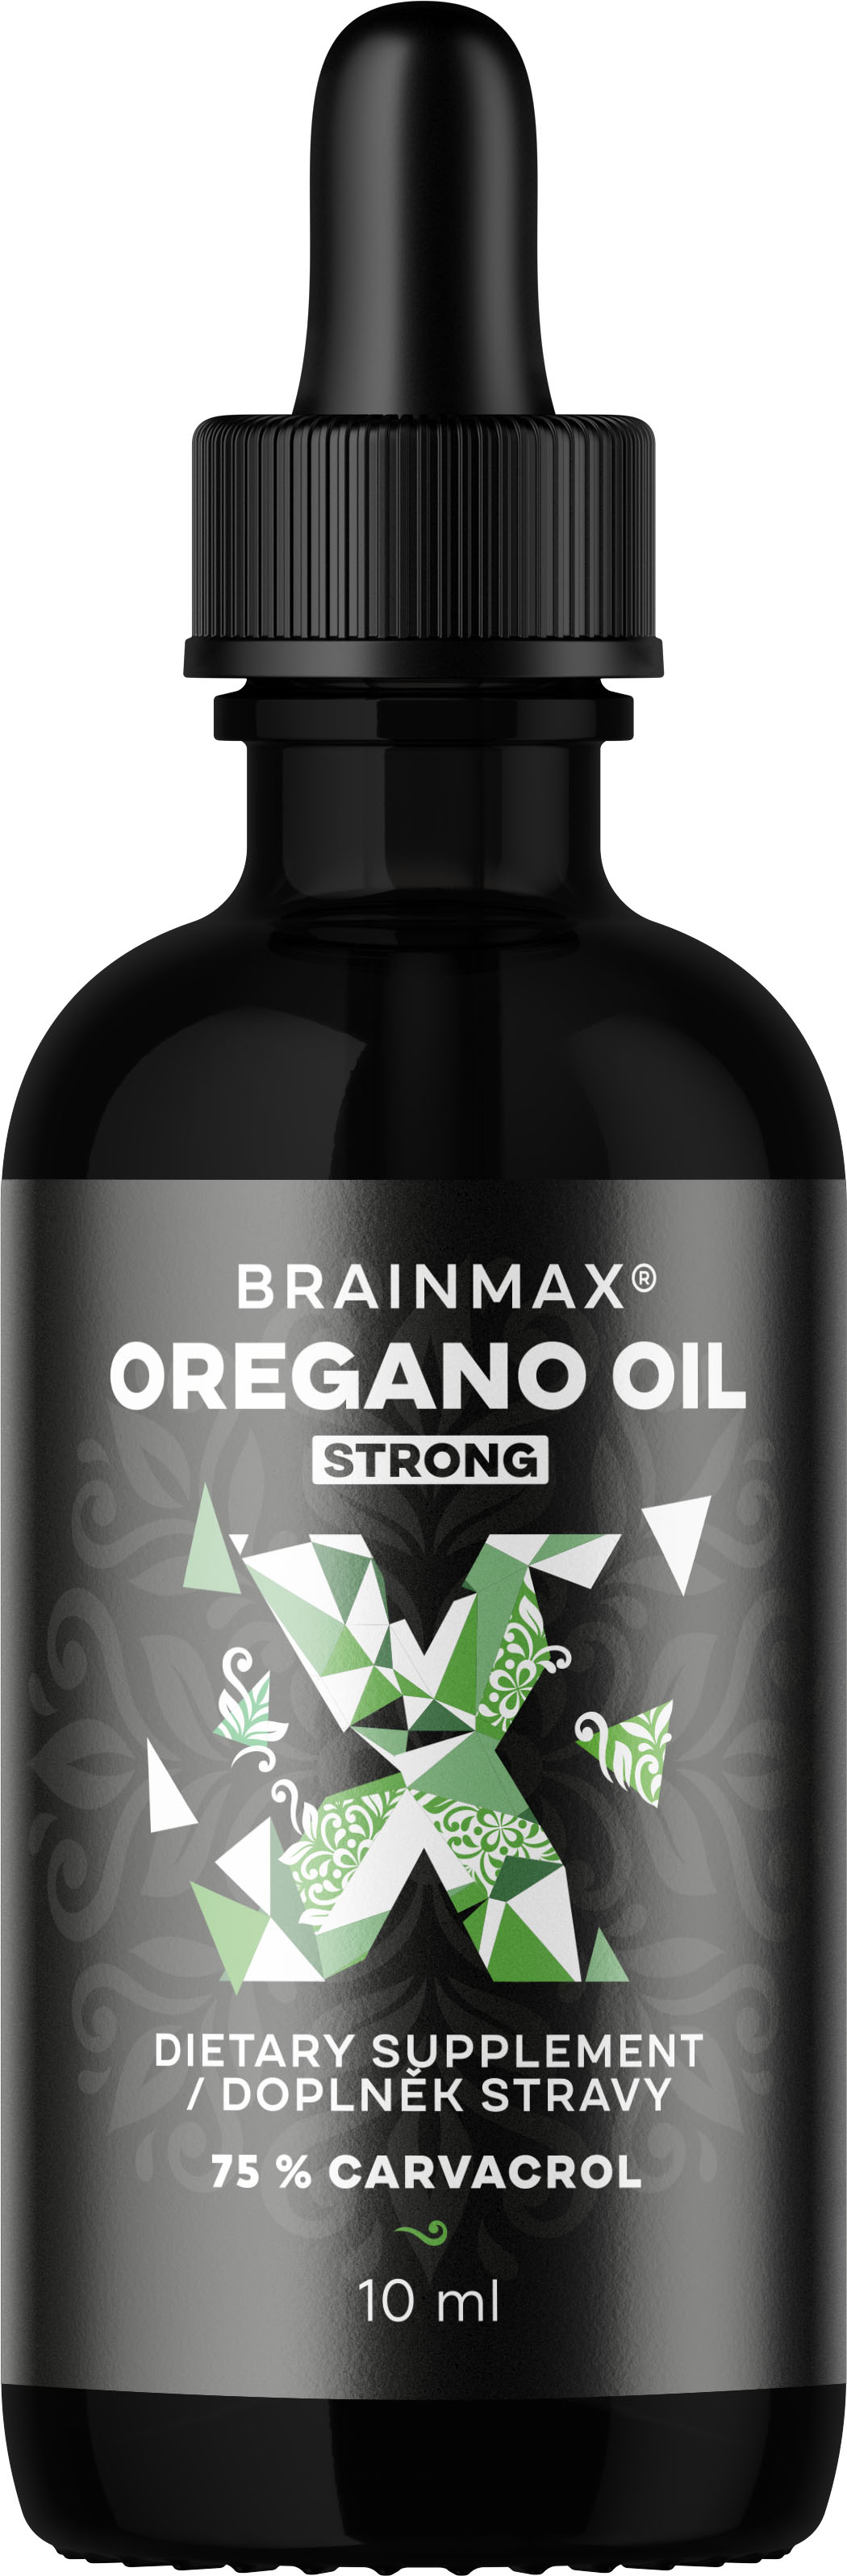 Levně BrainMax Oregano oil, oregánový olej, 10 ml Olej z oregána s obsahem 75% karvakrolu, doplněk stravy